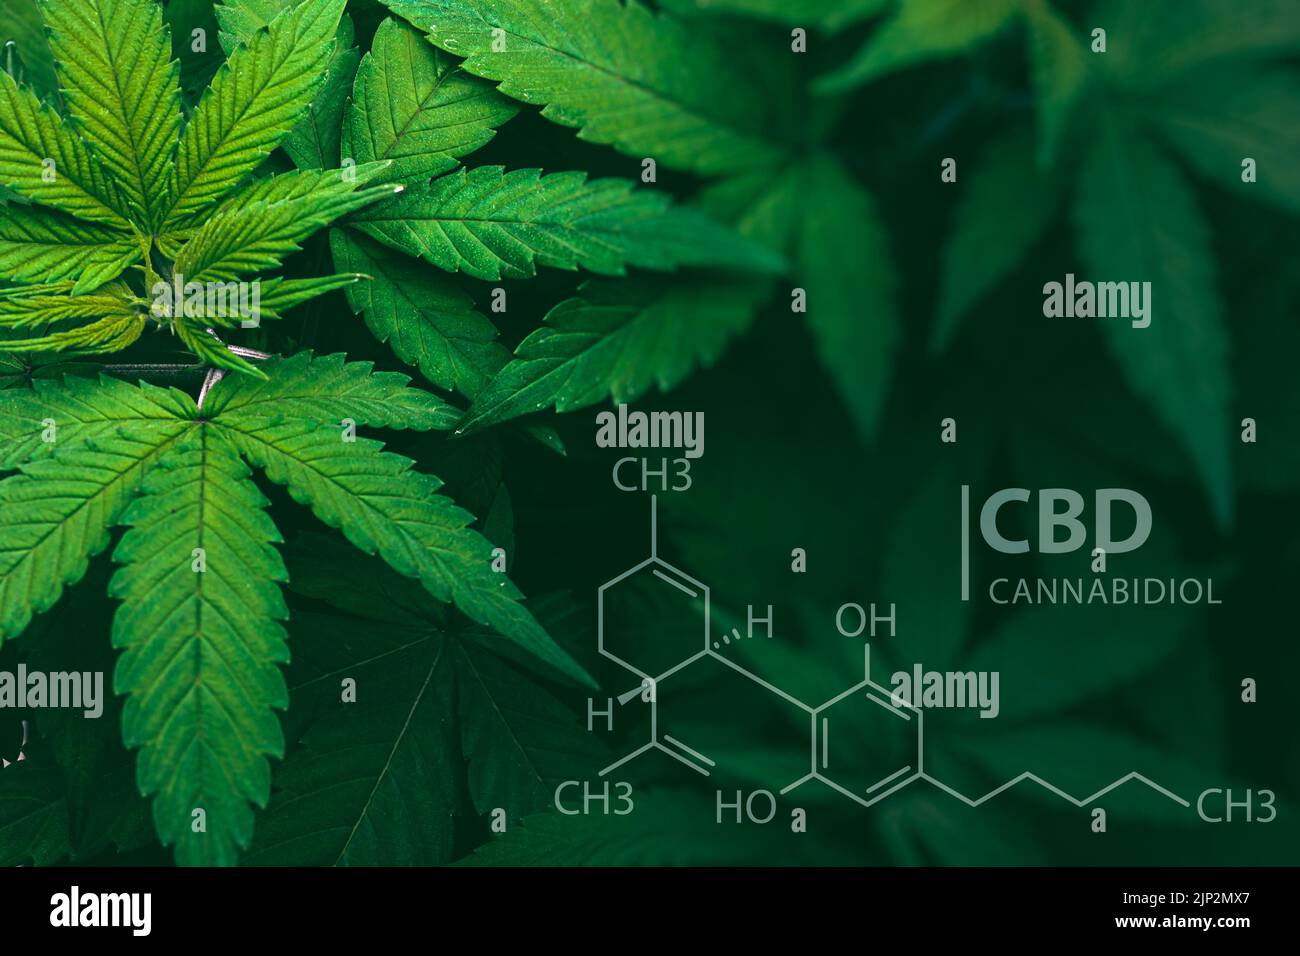 Cannabis CBD planta marihuana hoja con estructura química para antecedentes científicos de cáñamo Foto de stock